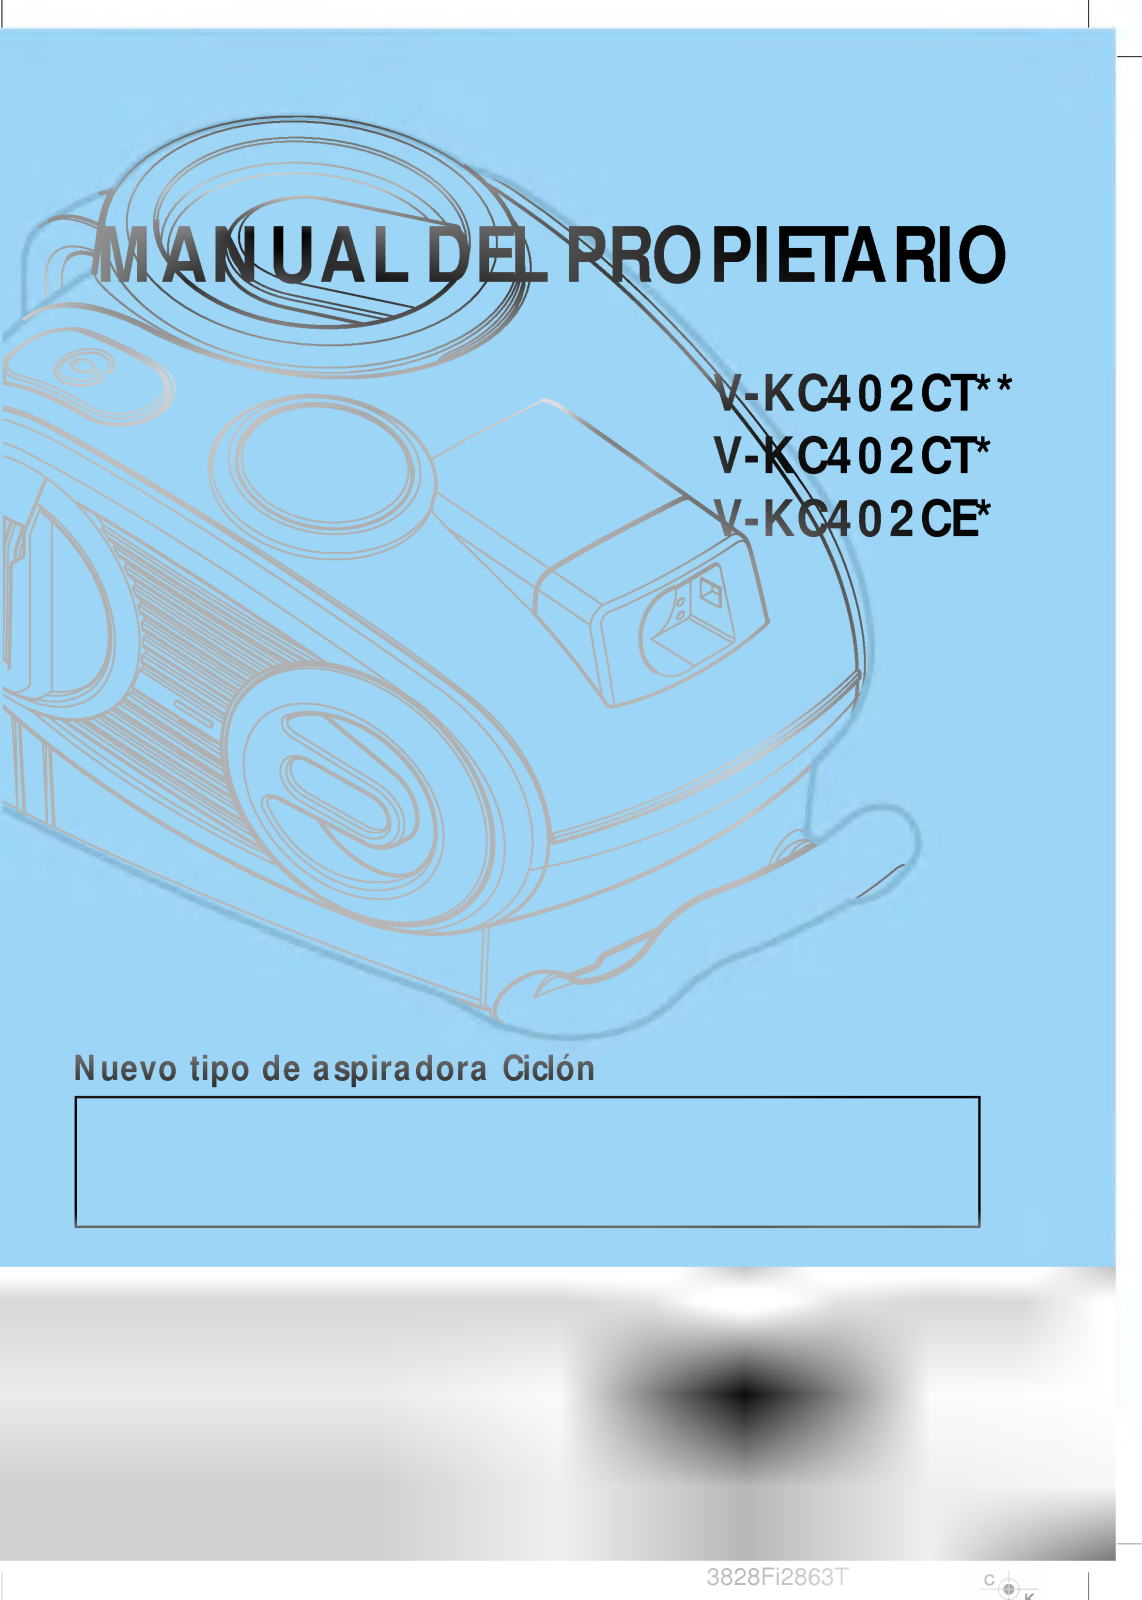 LG V-KC402CTUQ User Manual